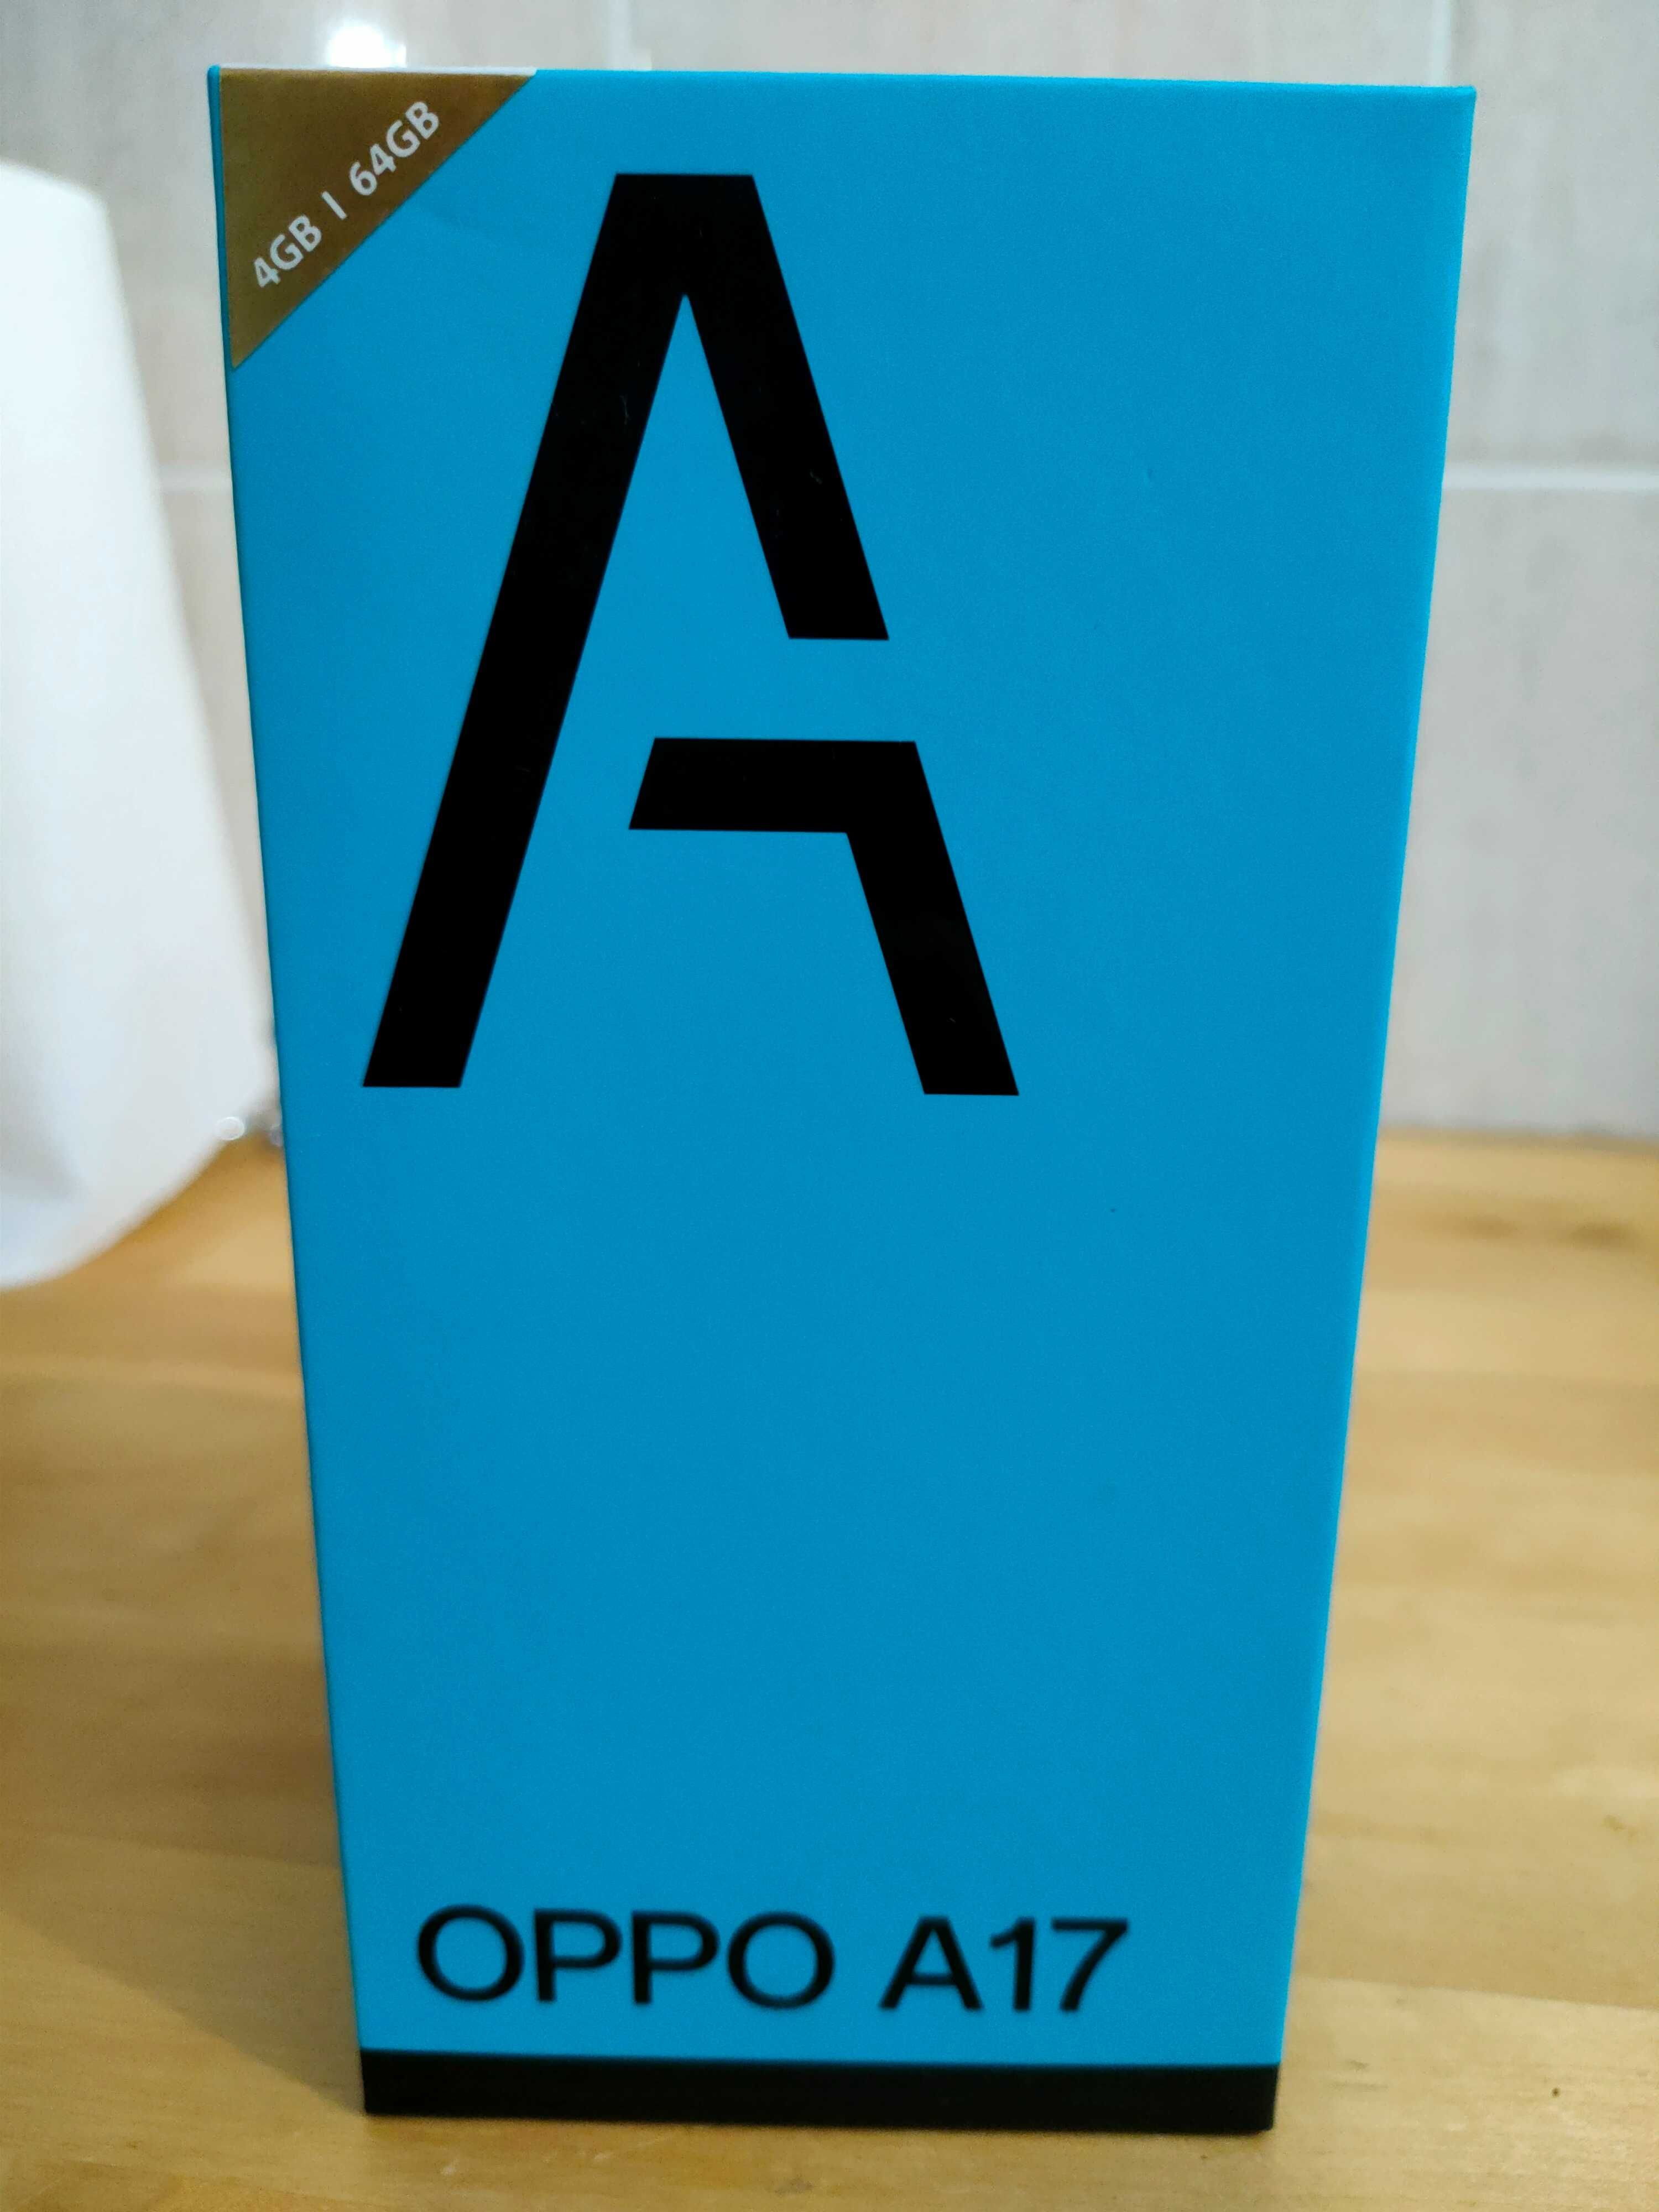 OPPO A17 novo, embalagem selada